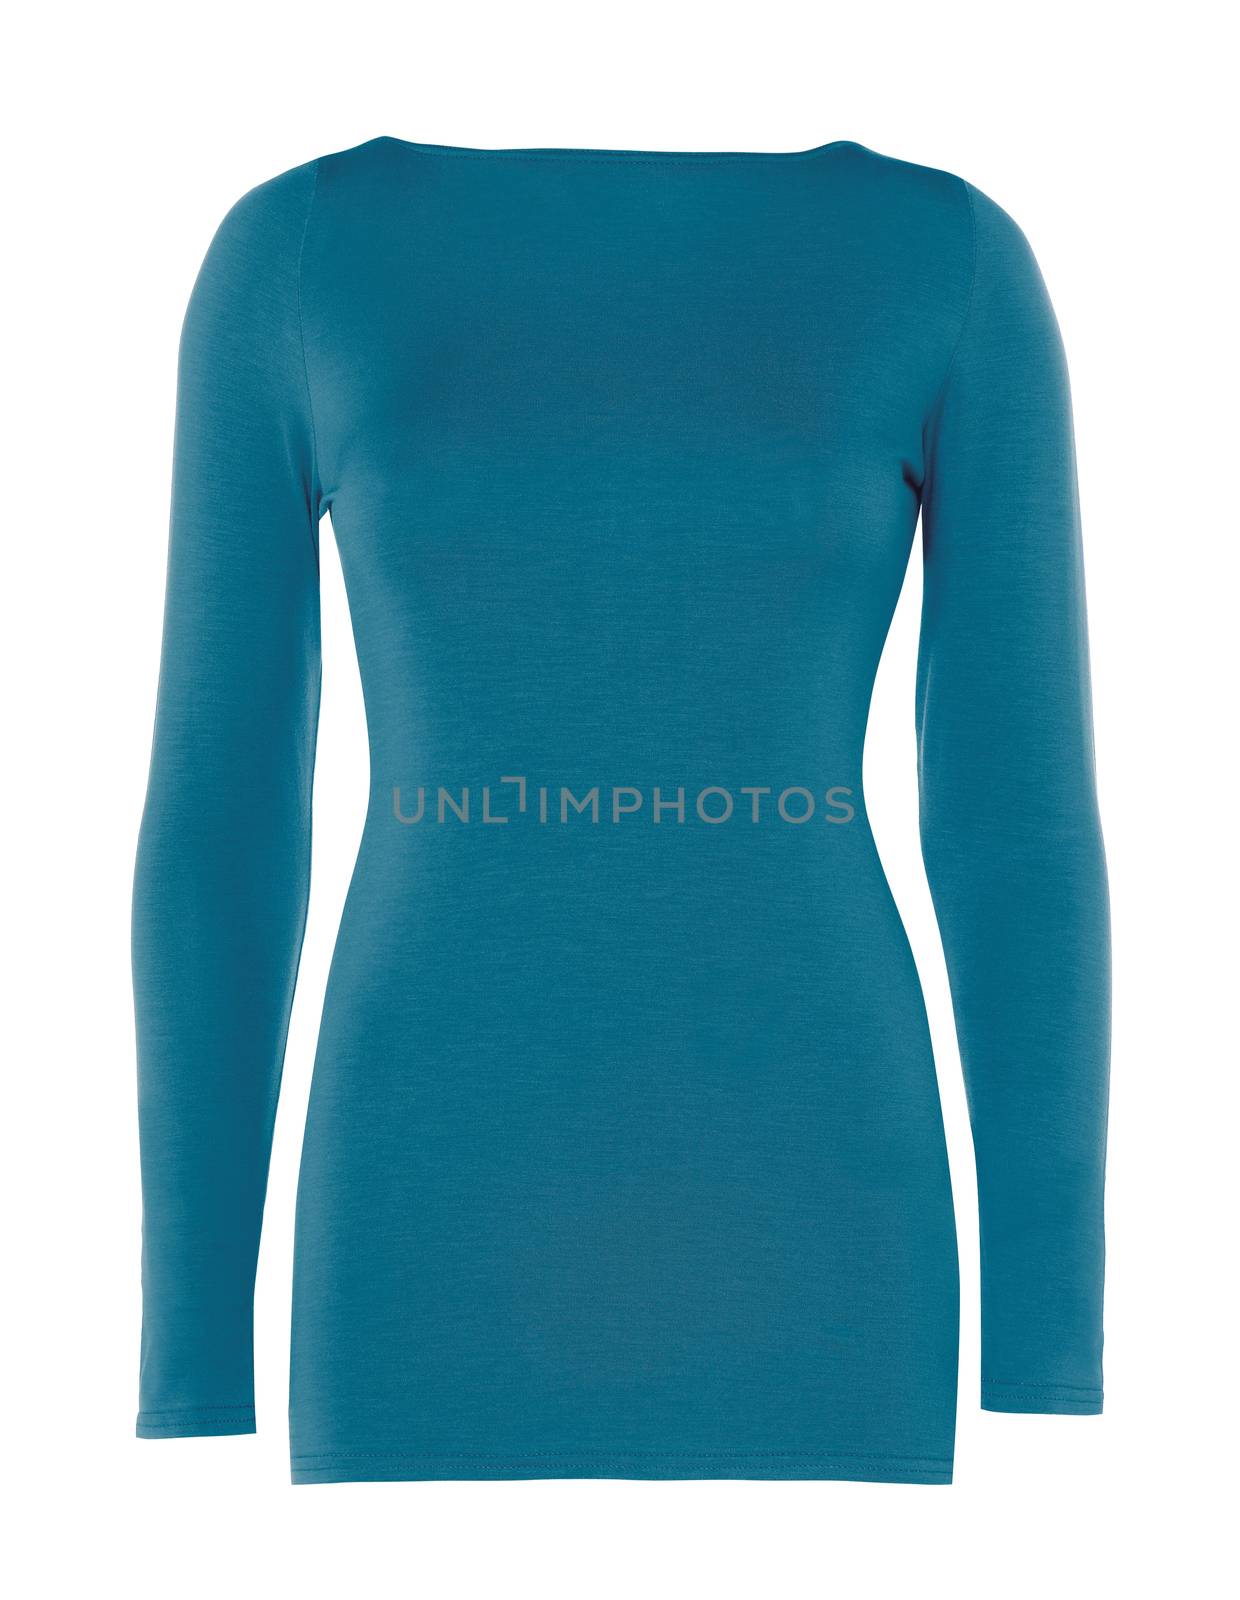 blue female sweater isolated on white background